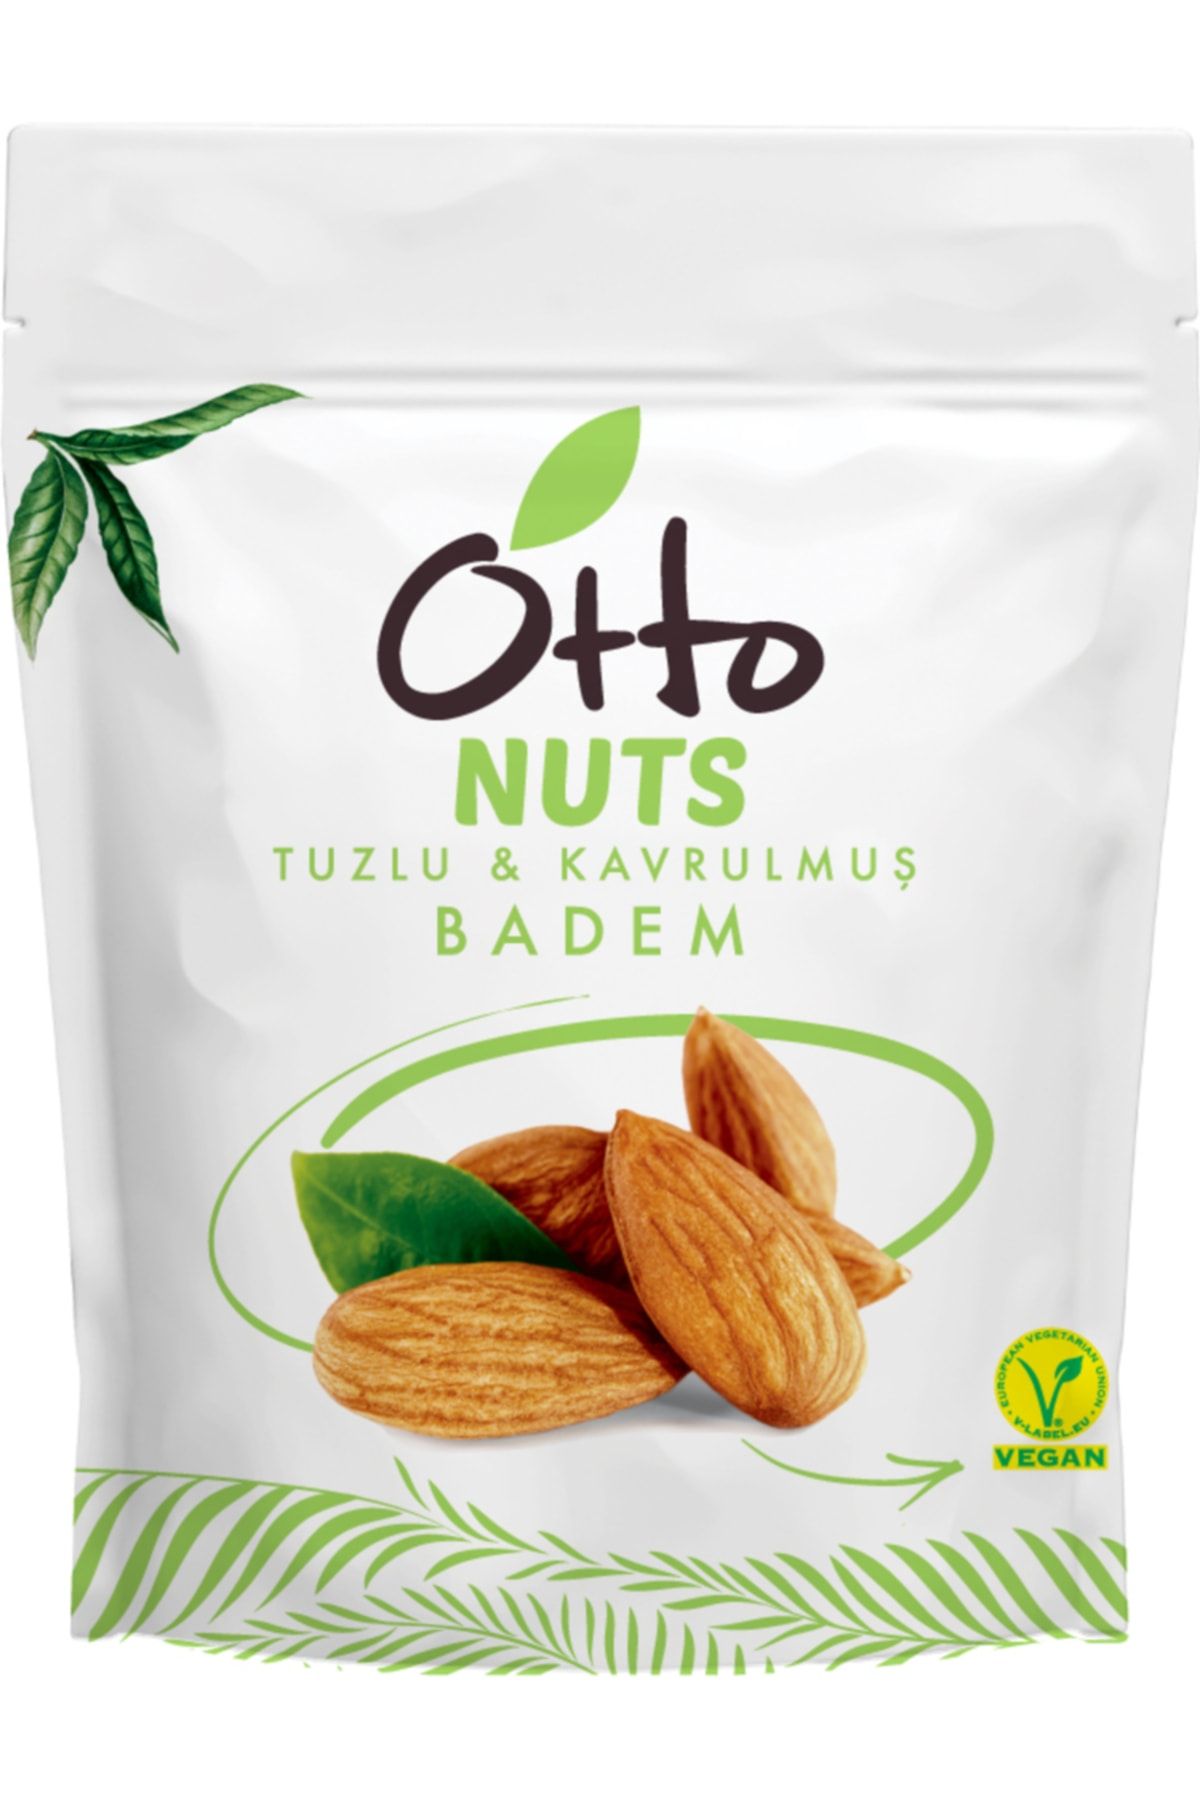 Otto Nuts Vegan Tuzlu Kavrulmuş Badem 90 G